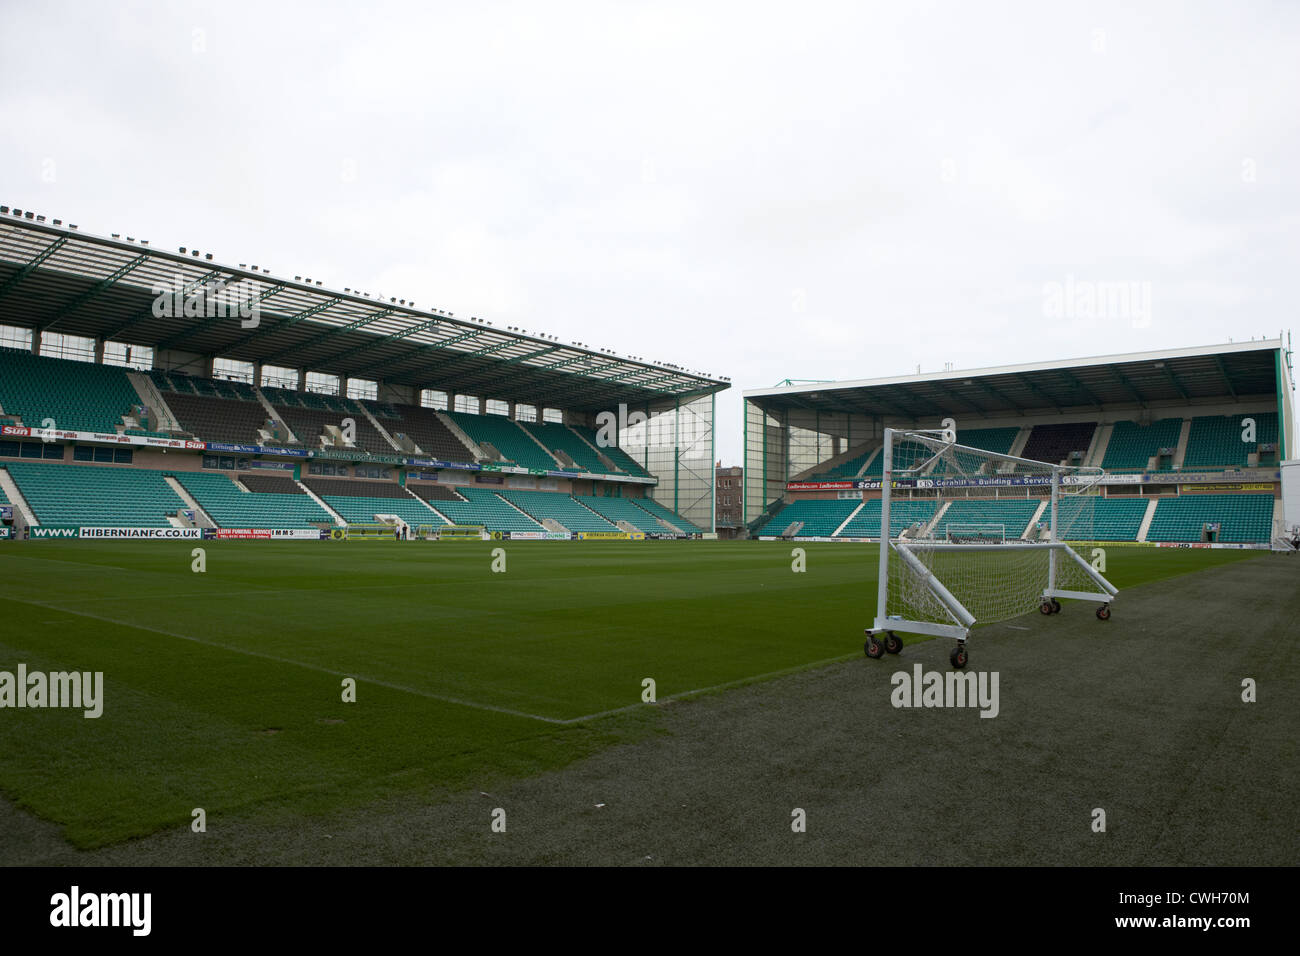 Le stade de football de la route de pâques hibernian football club Edinburgh, Scotland, UK, Royaume-Uni Banque D'Images